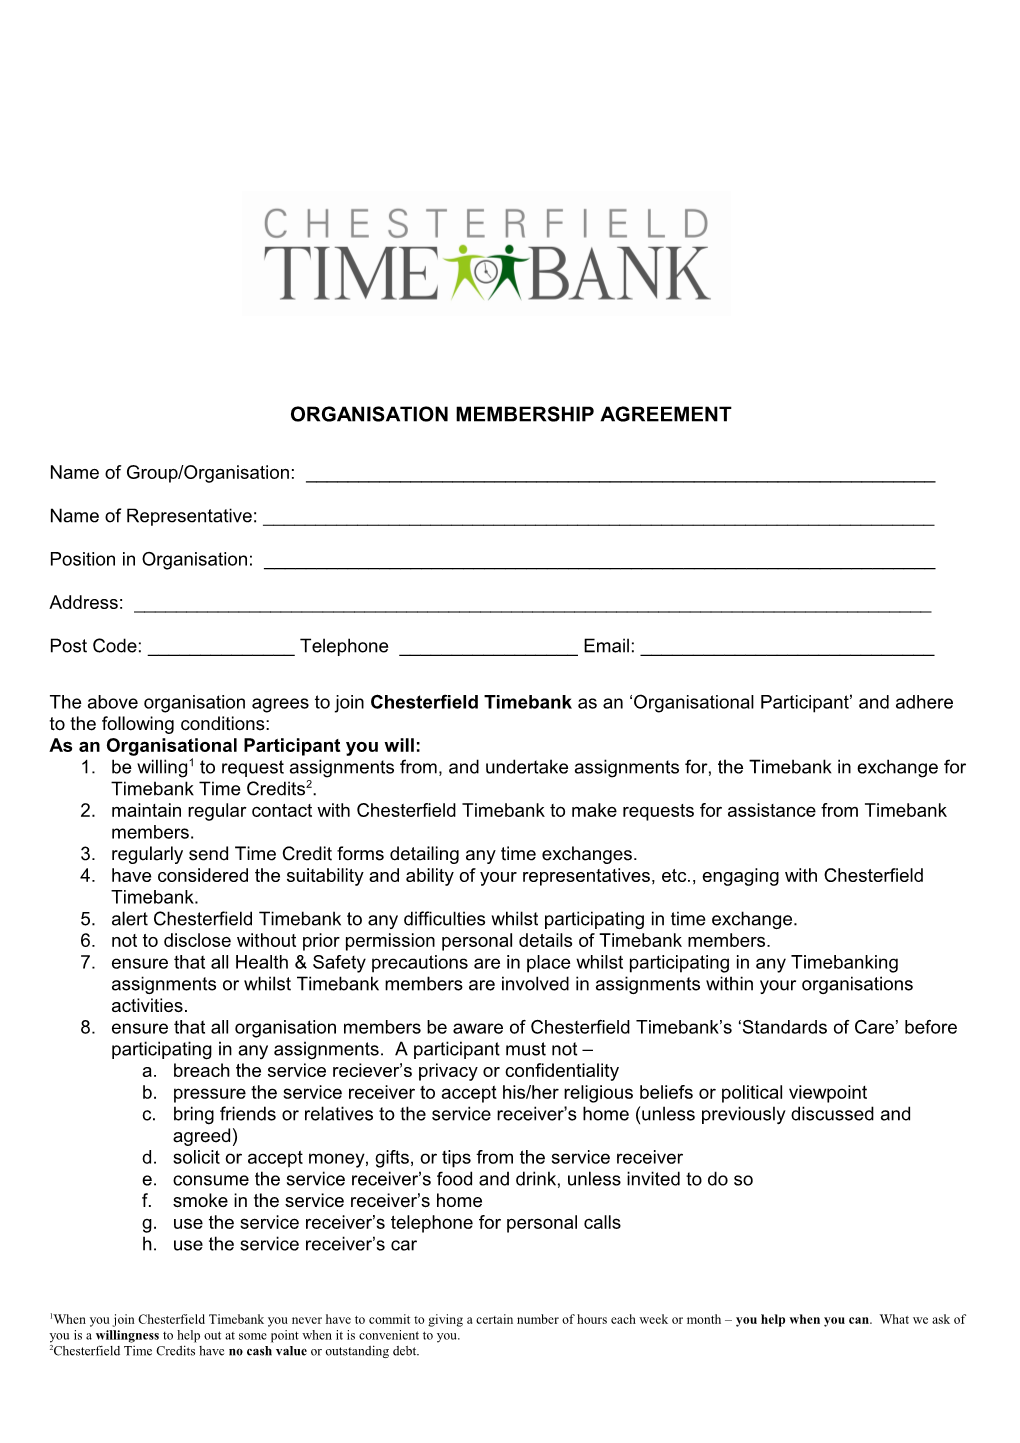 Organisation Membership Agreement